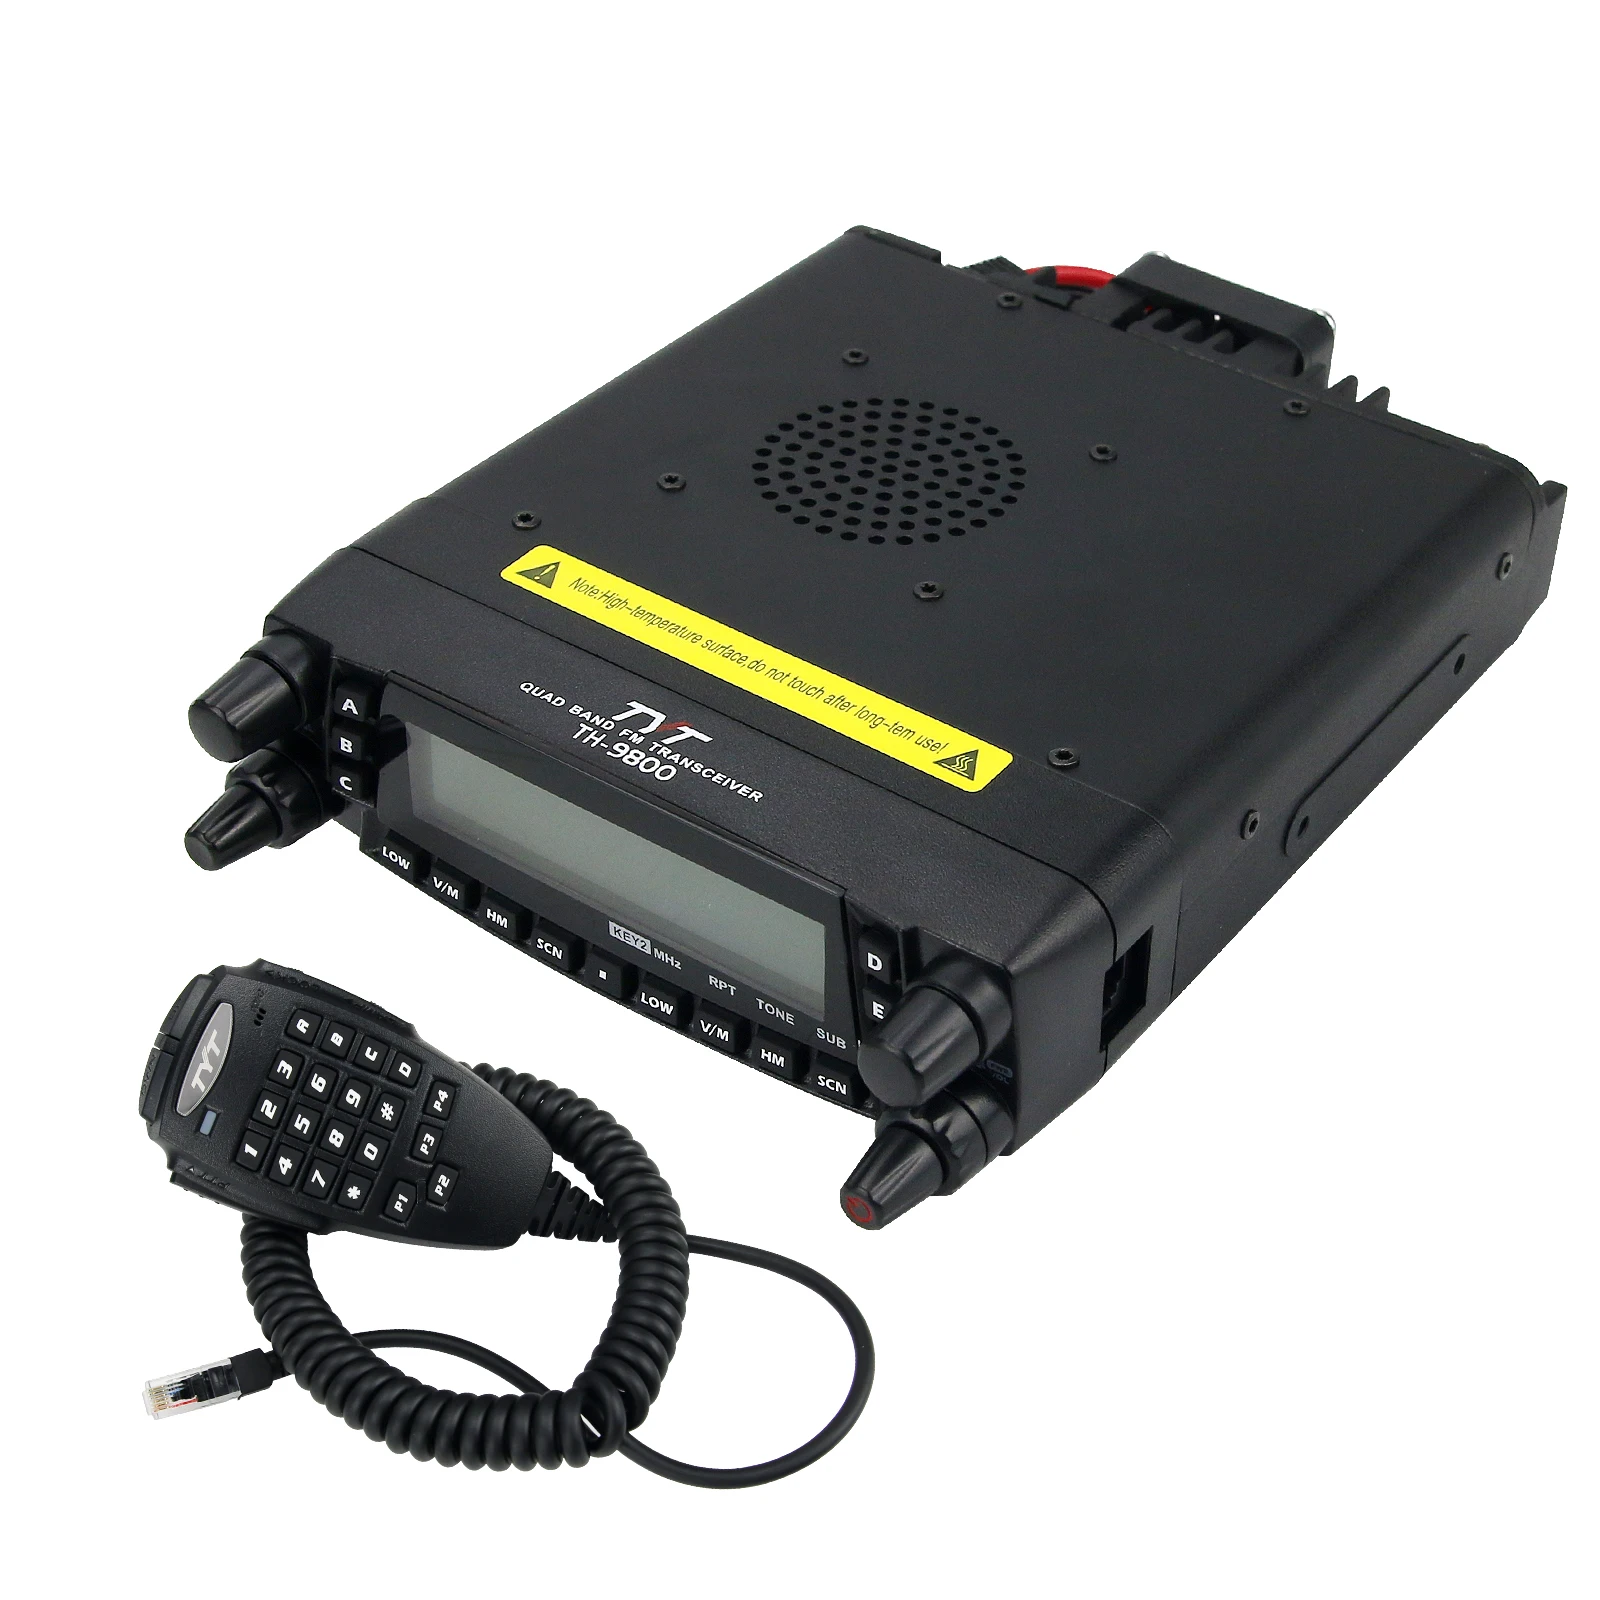 Tyt Th-9800 Mobile Radio Quad Band 50w Car Transceiver Walkie Talkie Dual  Display Repeater Scrambler W/ Usb Cable Walkie Talkie AliExpress